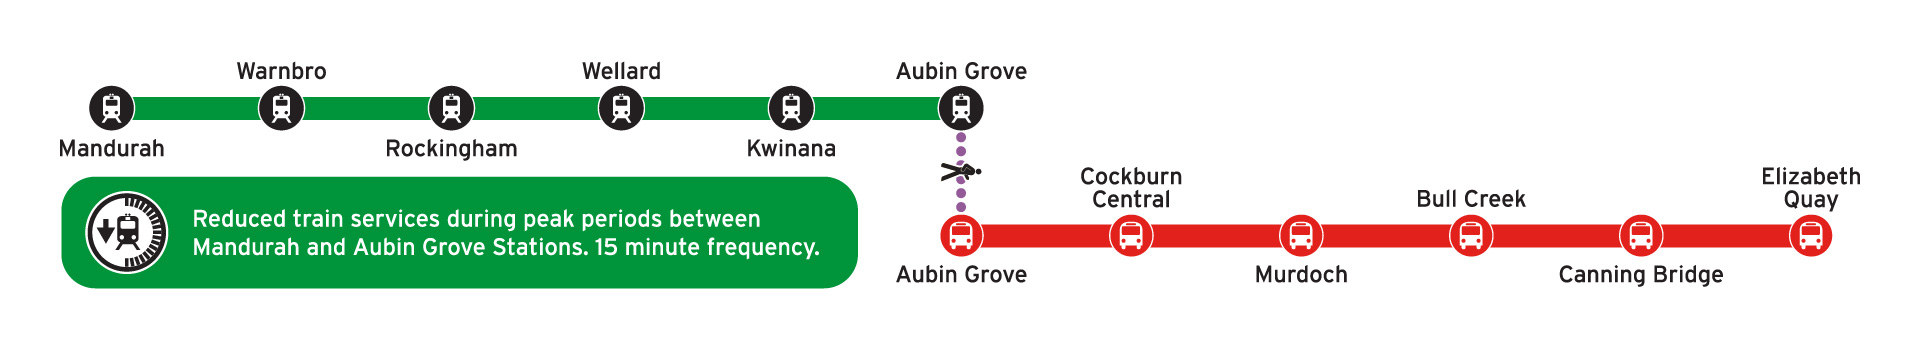 Trains cancelled between Elizabeth Quay and Aubin Grove. Reduced service between Aubin Grove and Mandurah